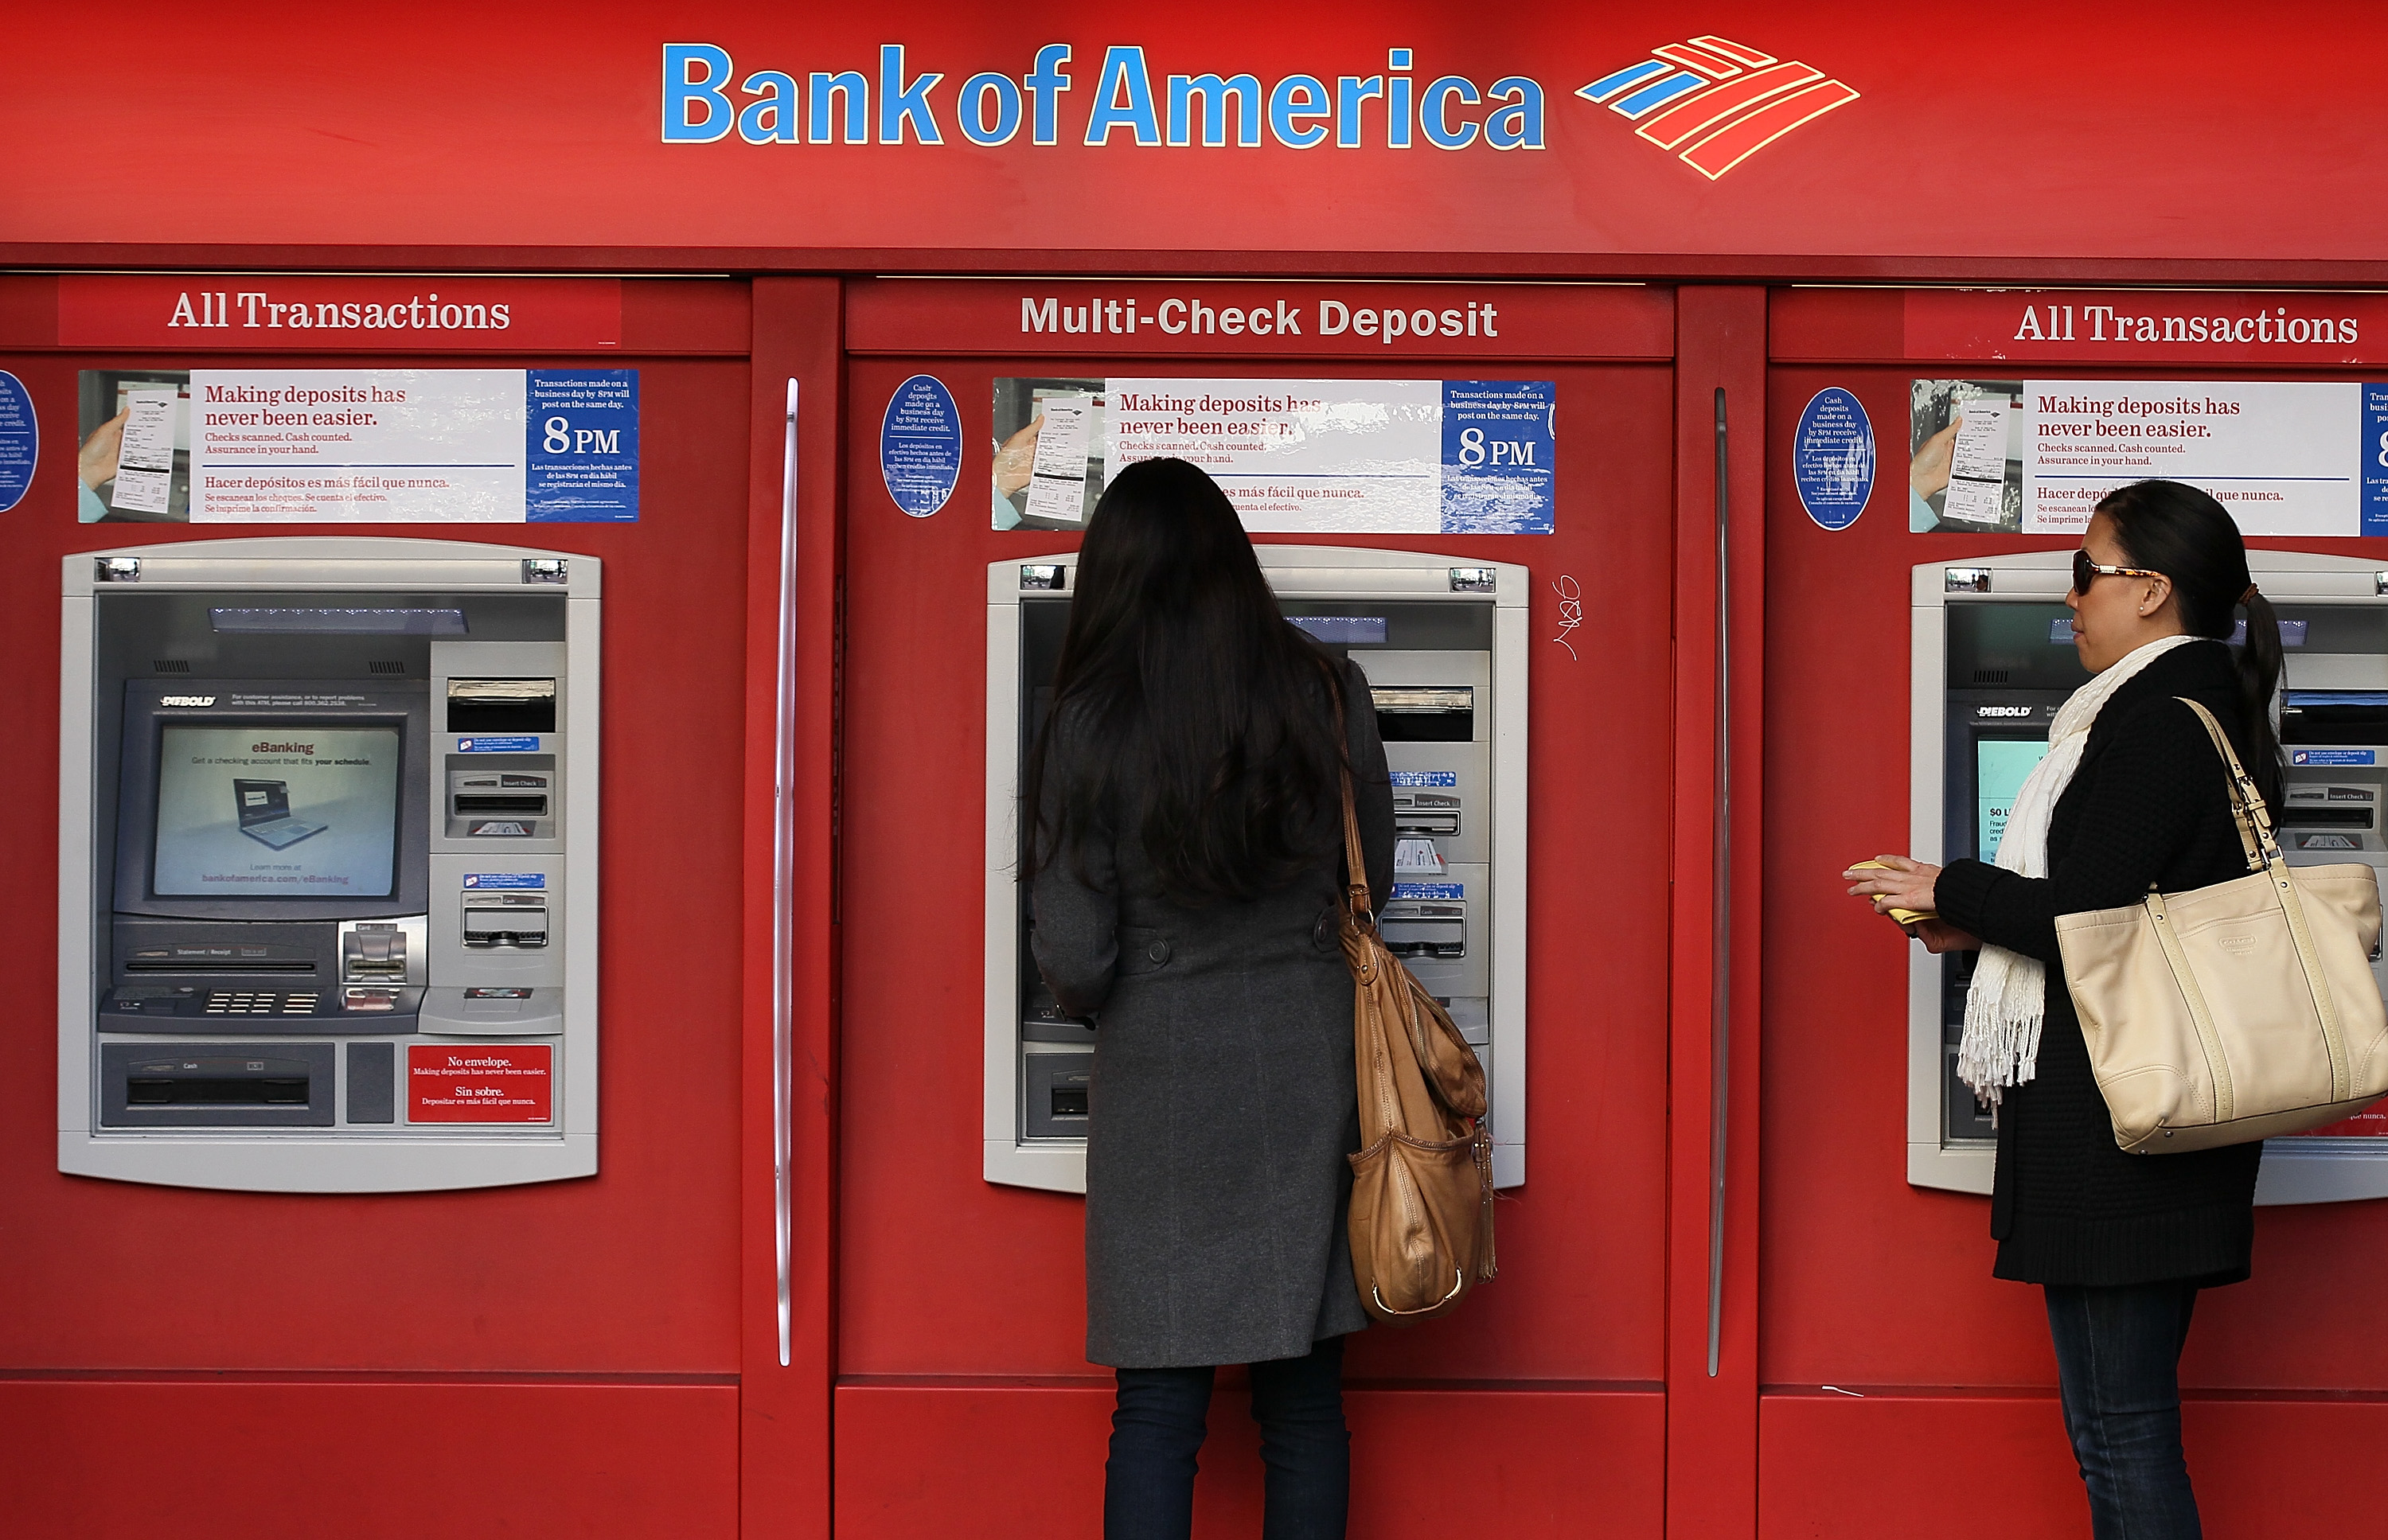 Bank of America plans $5 debit card fee - CBS News